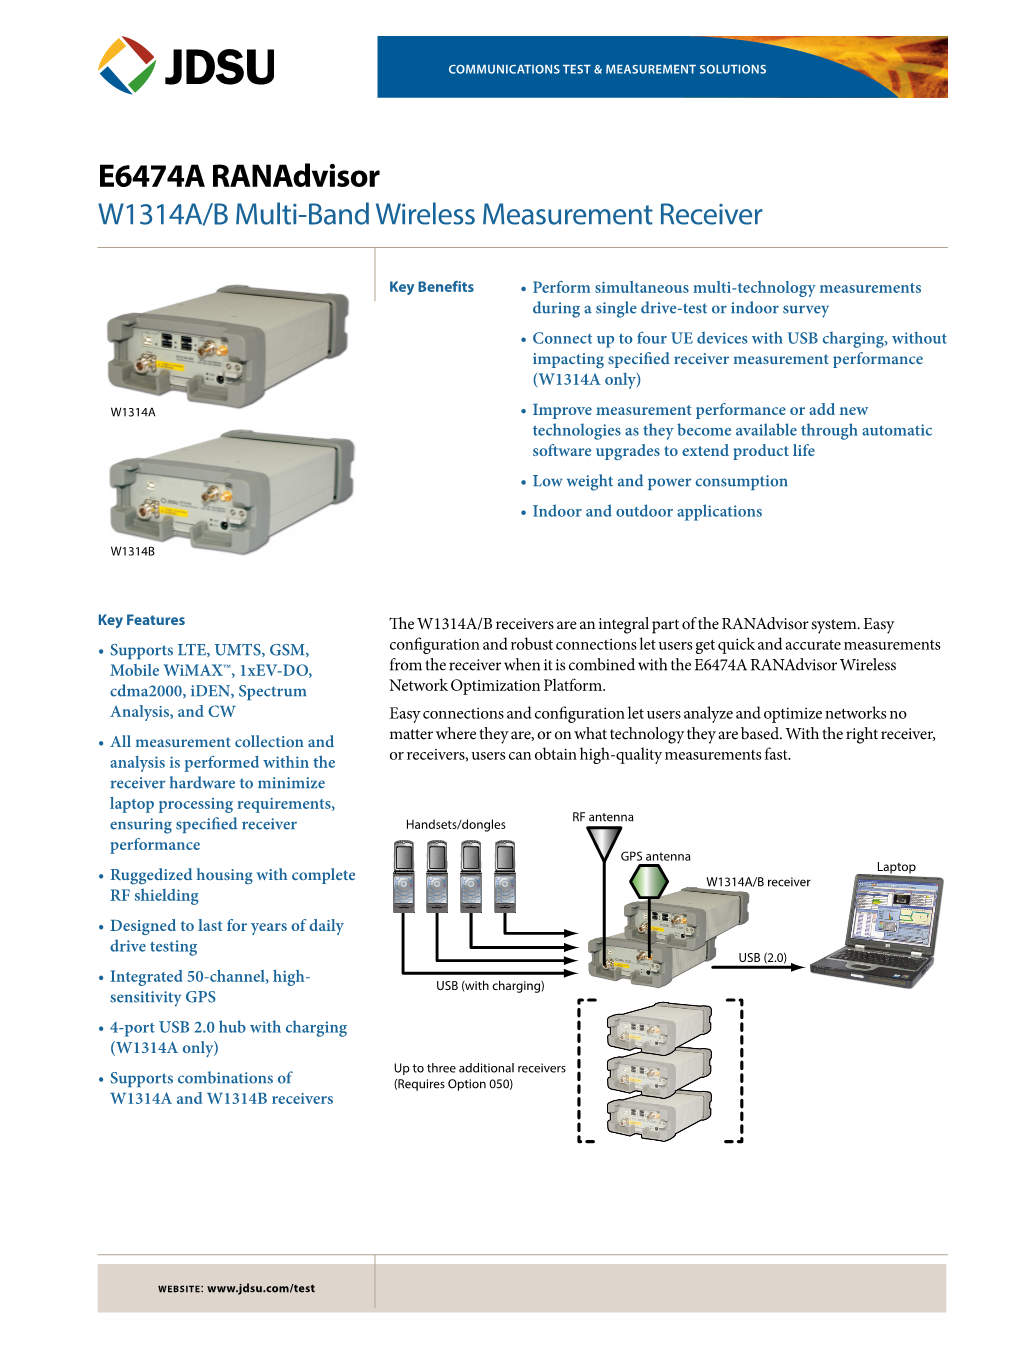 W1314A/B Multi-Band Wireless Measurement Receiver